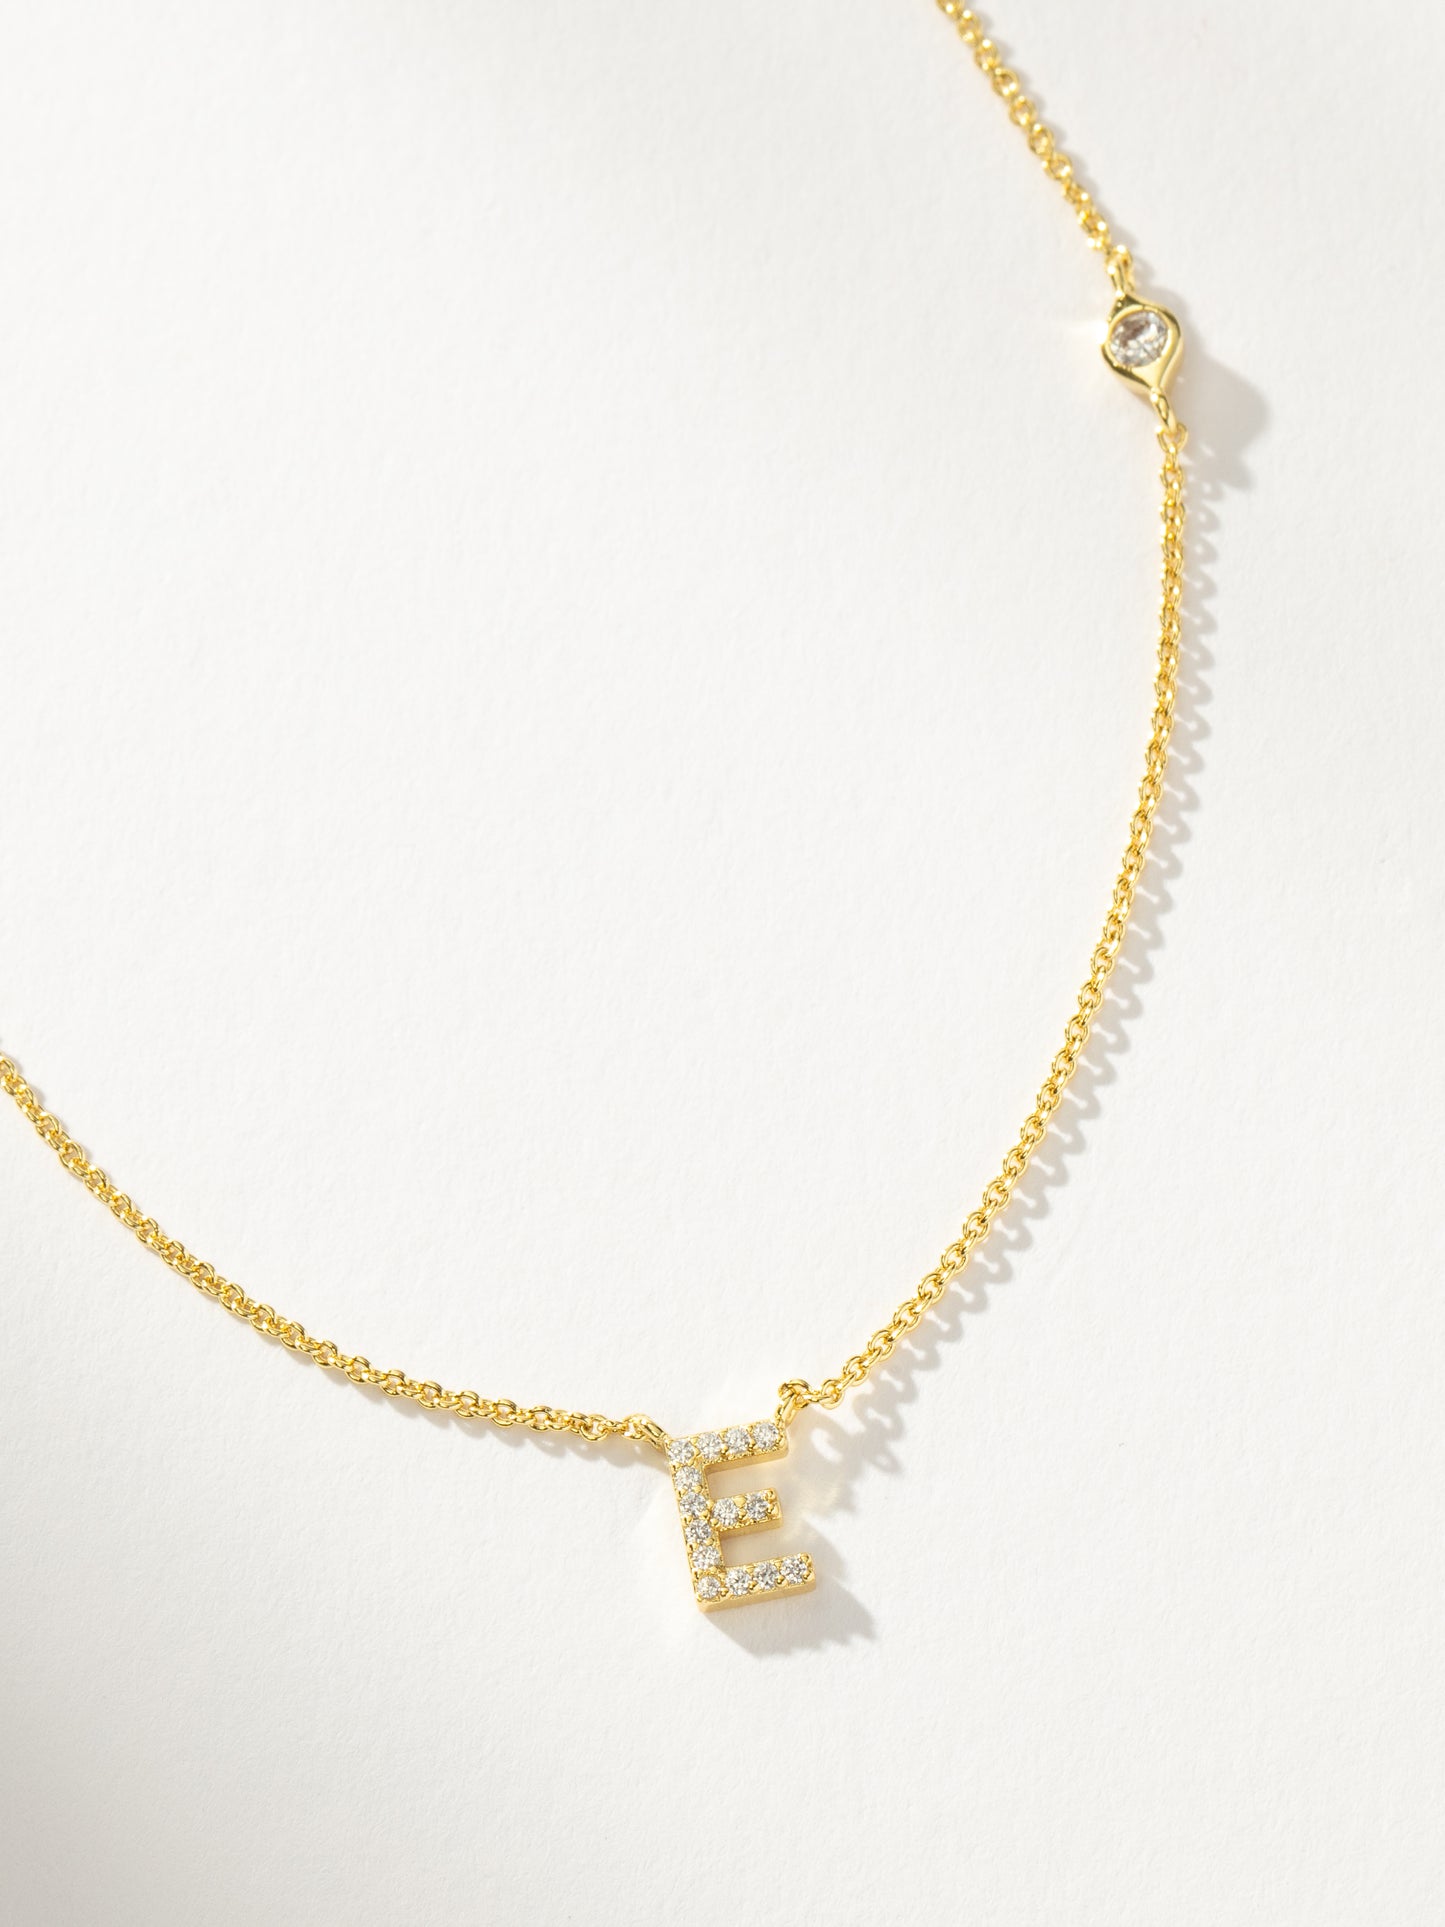 Pavé Initial Necklace | Gold E | Product Detail Image | Uncommon James